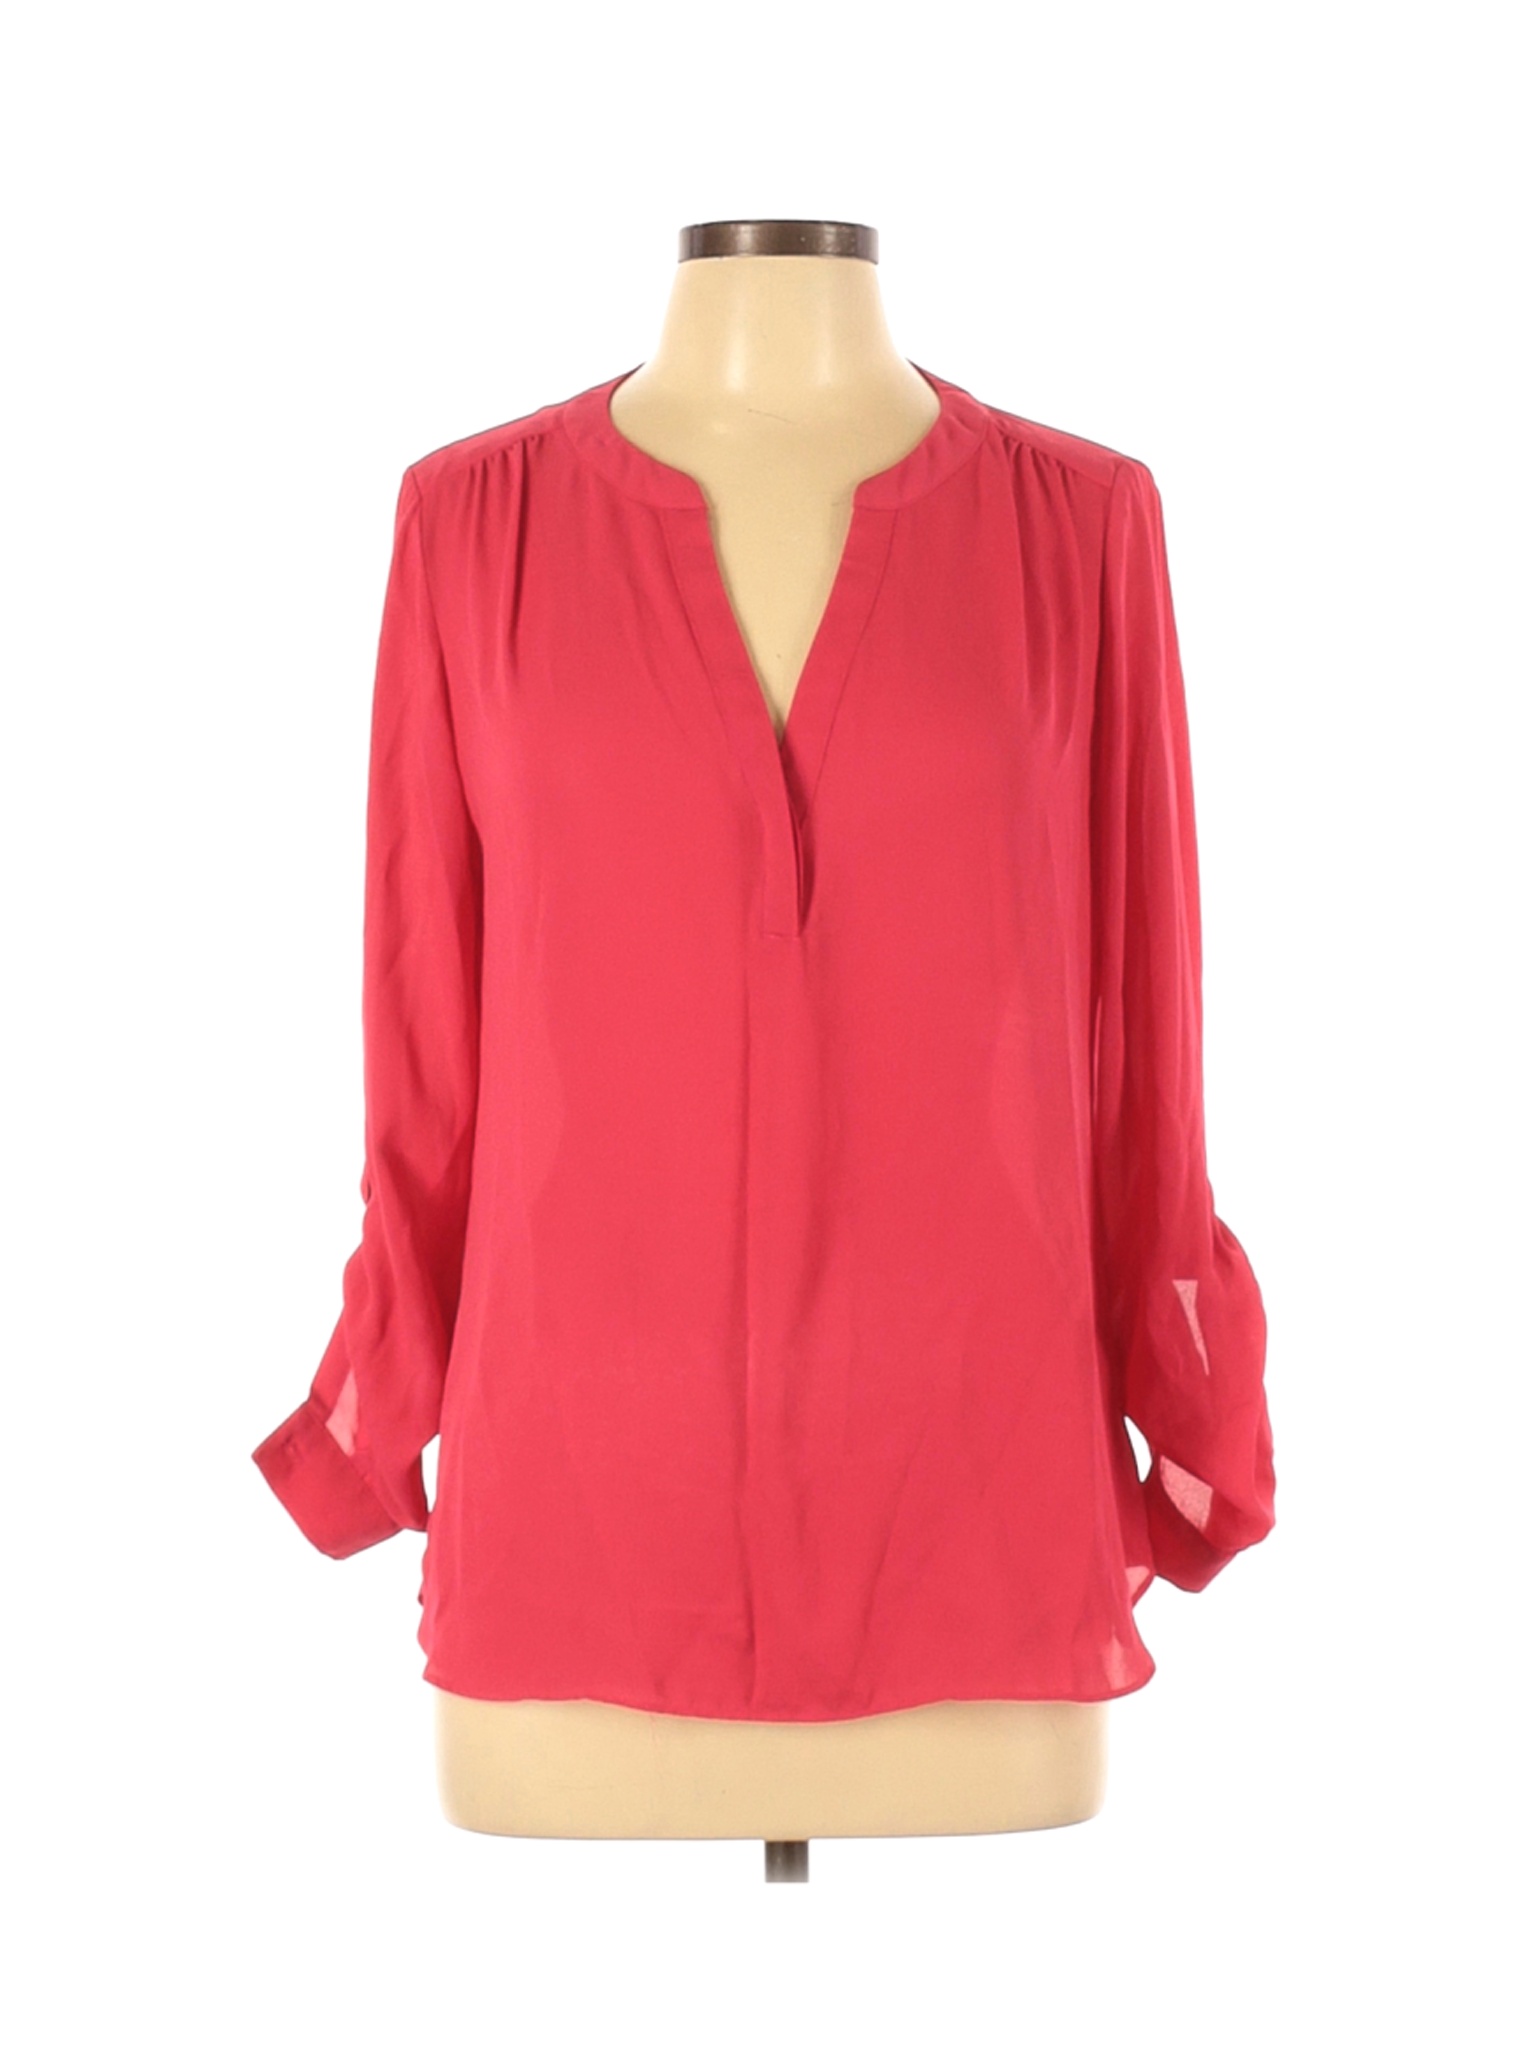 Candie's Women Pink Long Sleeve Blouse L | eBay